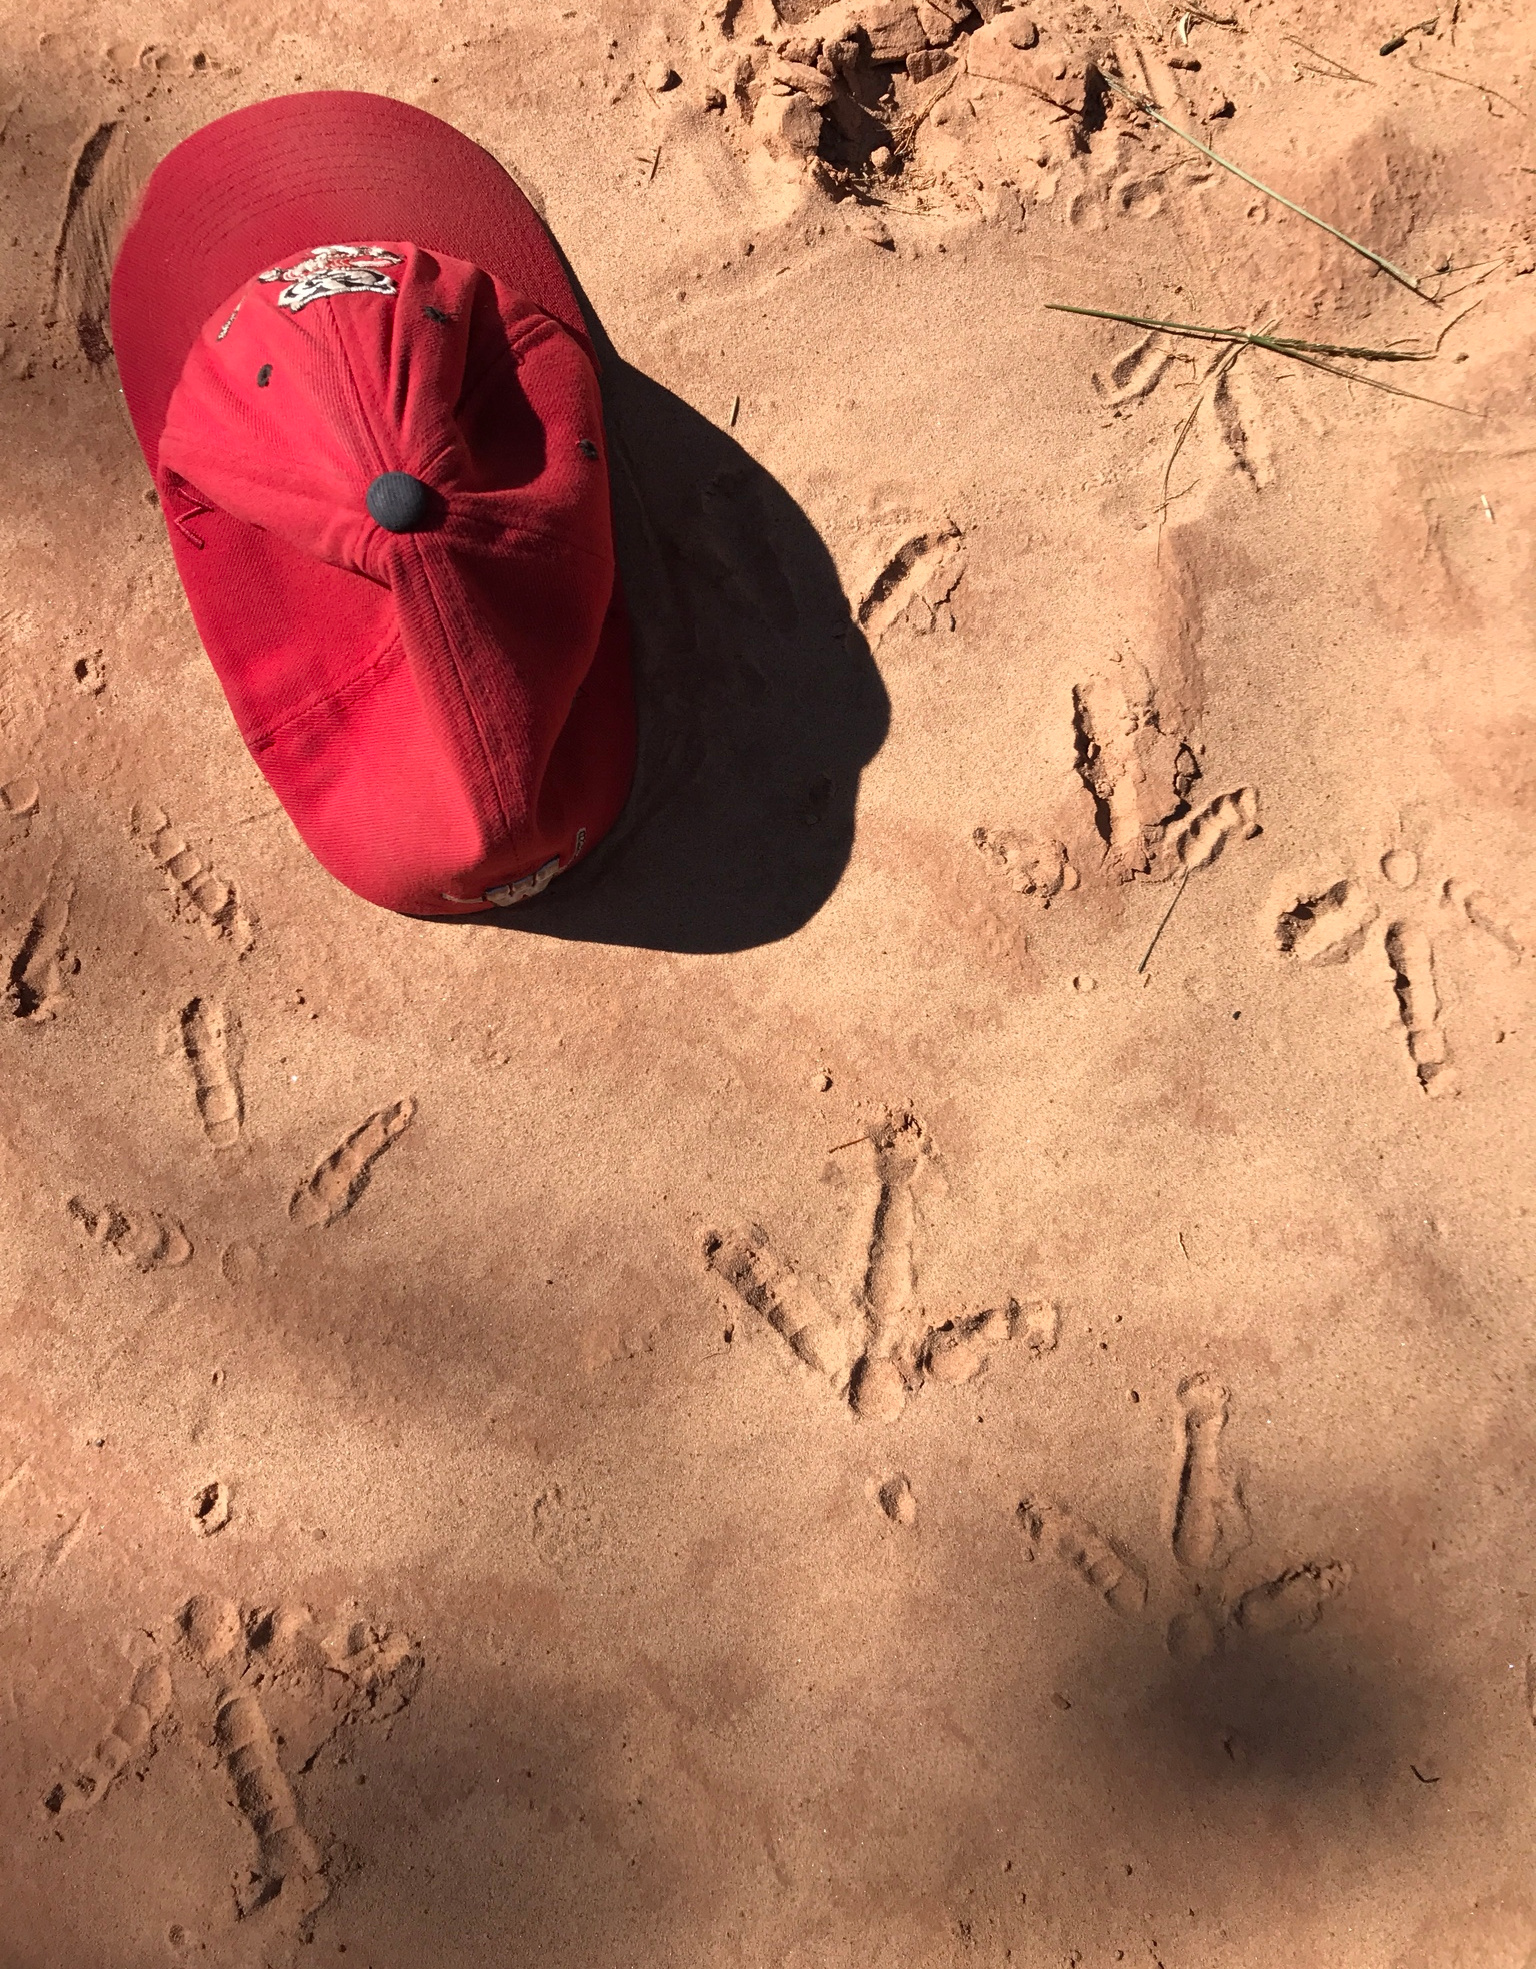 A hat marks some wild turkey tracks in light dirt.